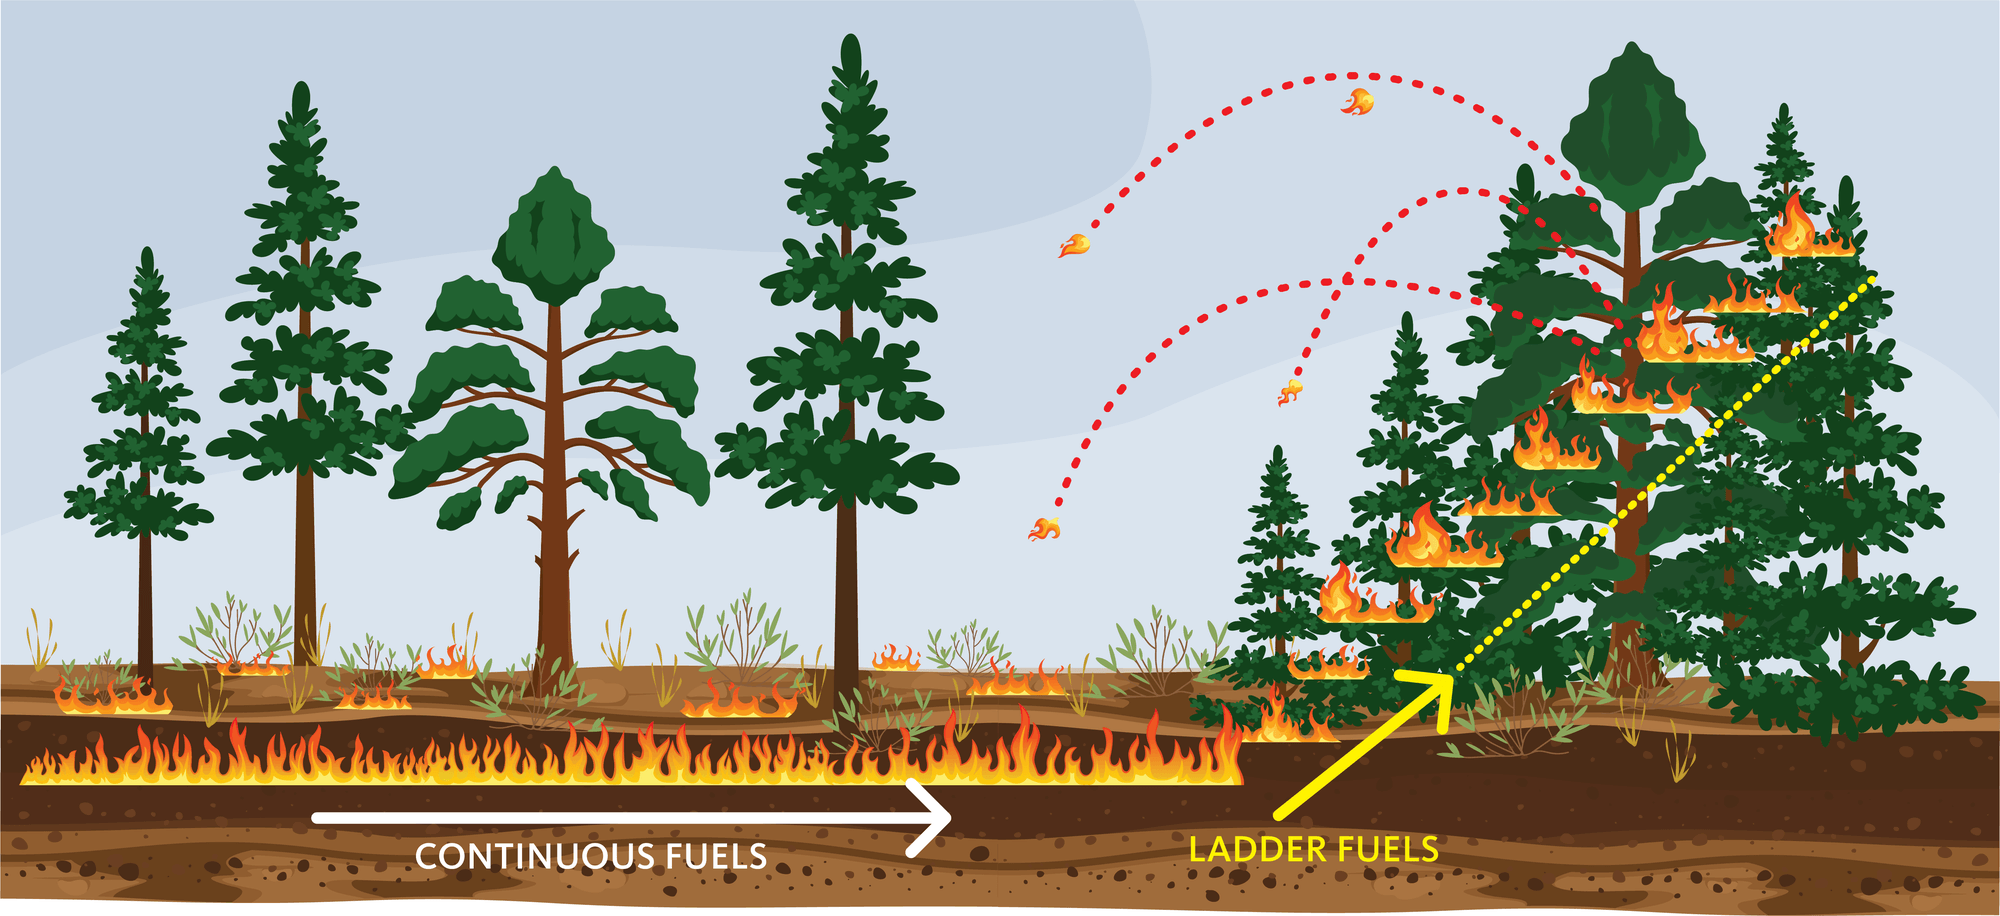 Fire spreading horizontally across land, then vertically into tree canopy